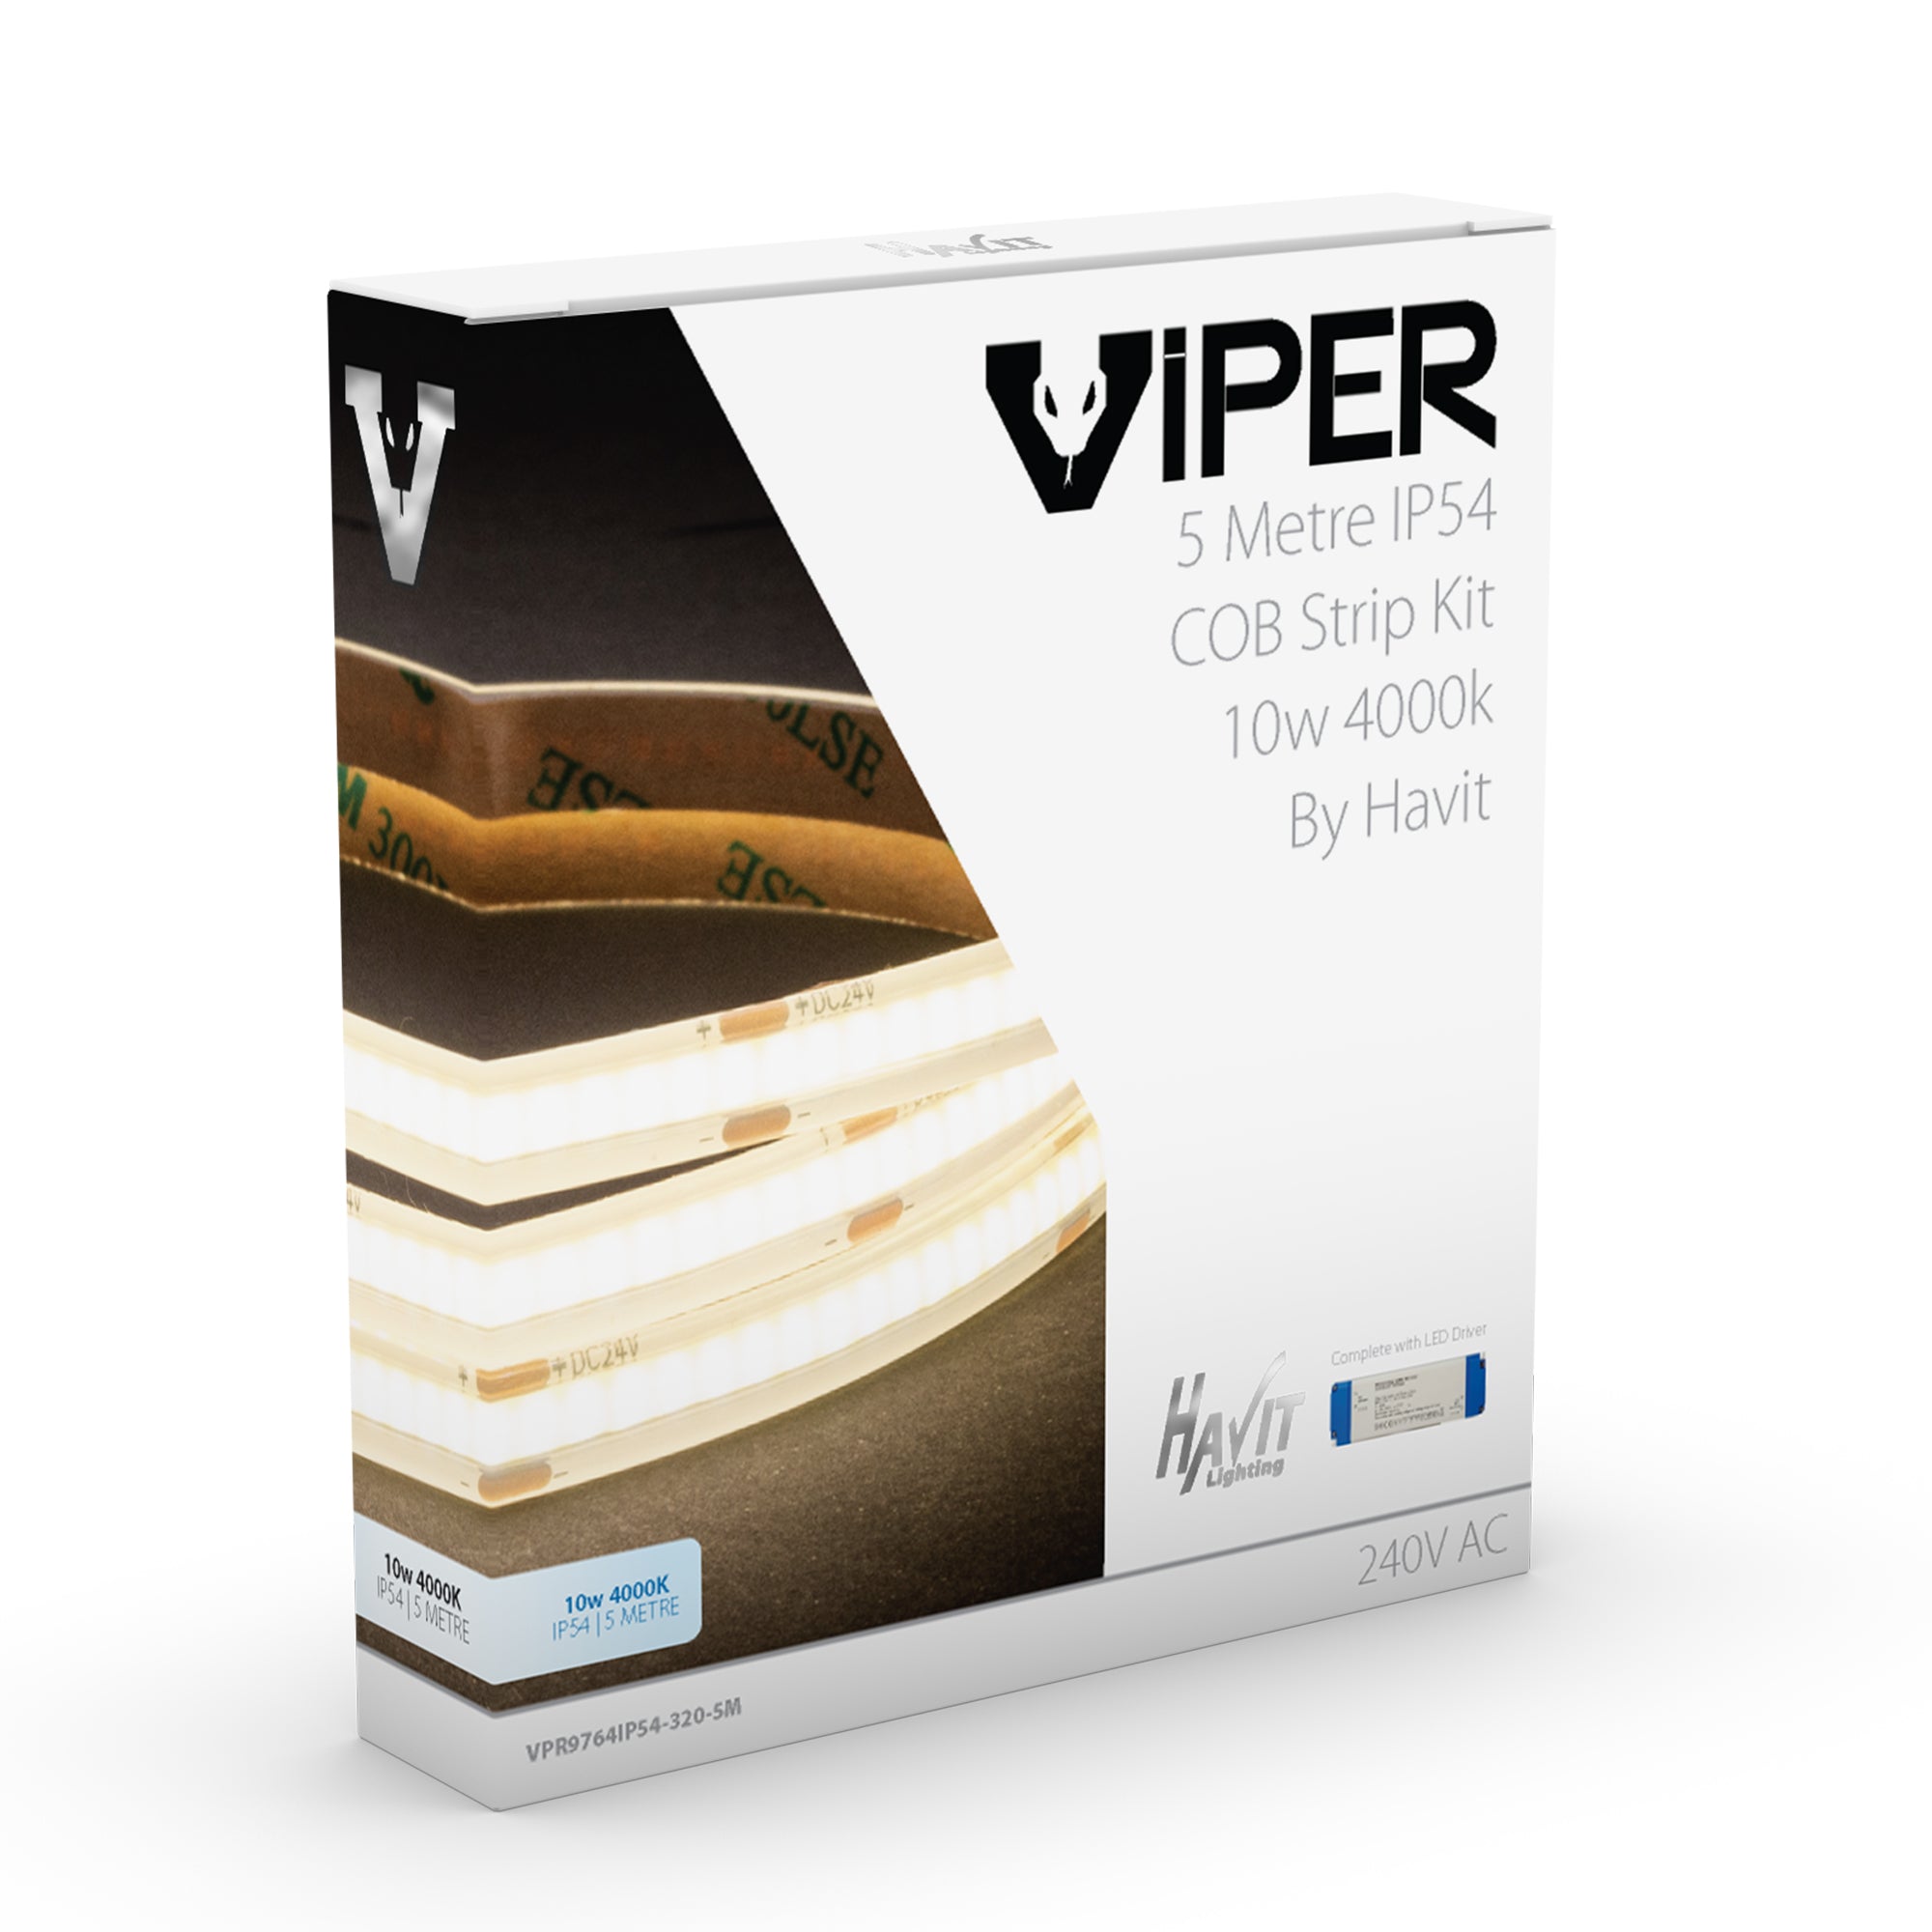 VPR9764IP54-320-5M - Viper COB 10w Per Metre 5m LED Strip kit 4000k